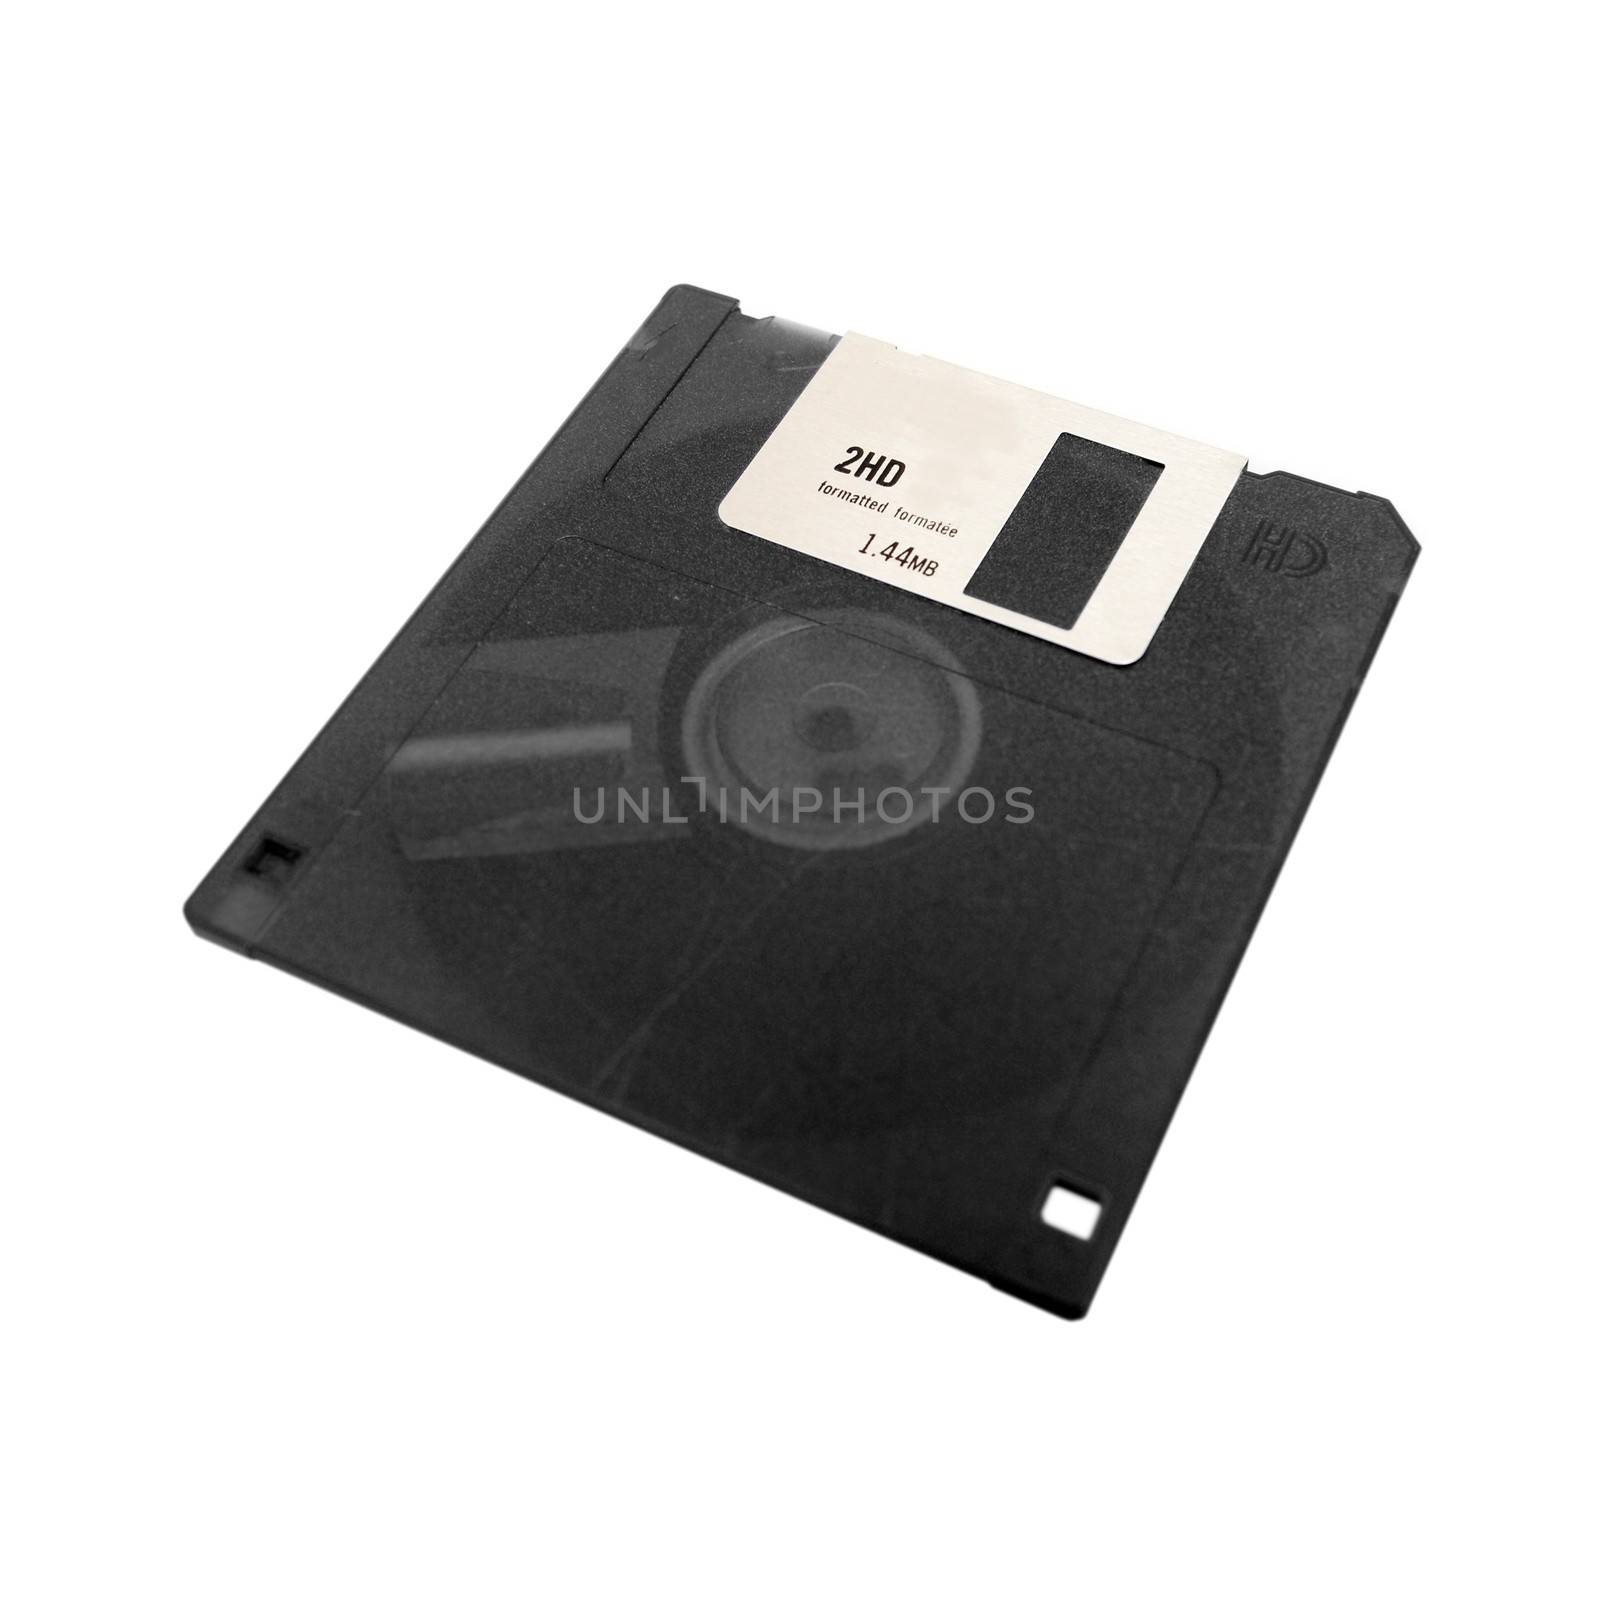 Floppy Disk by Kitch